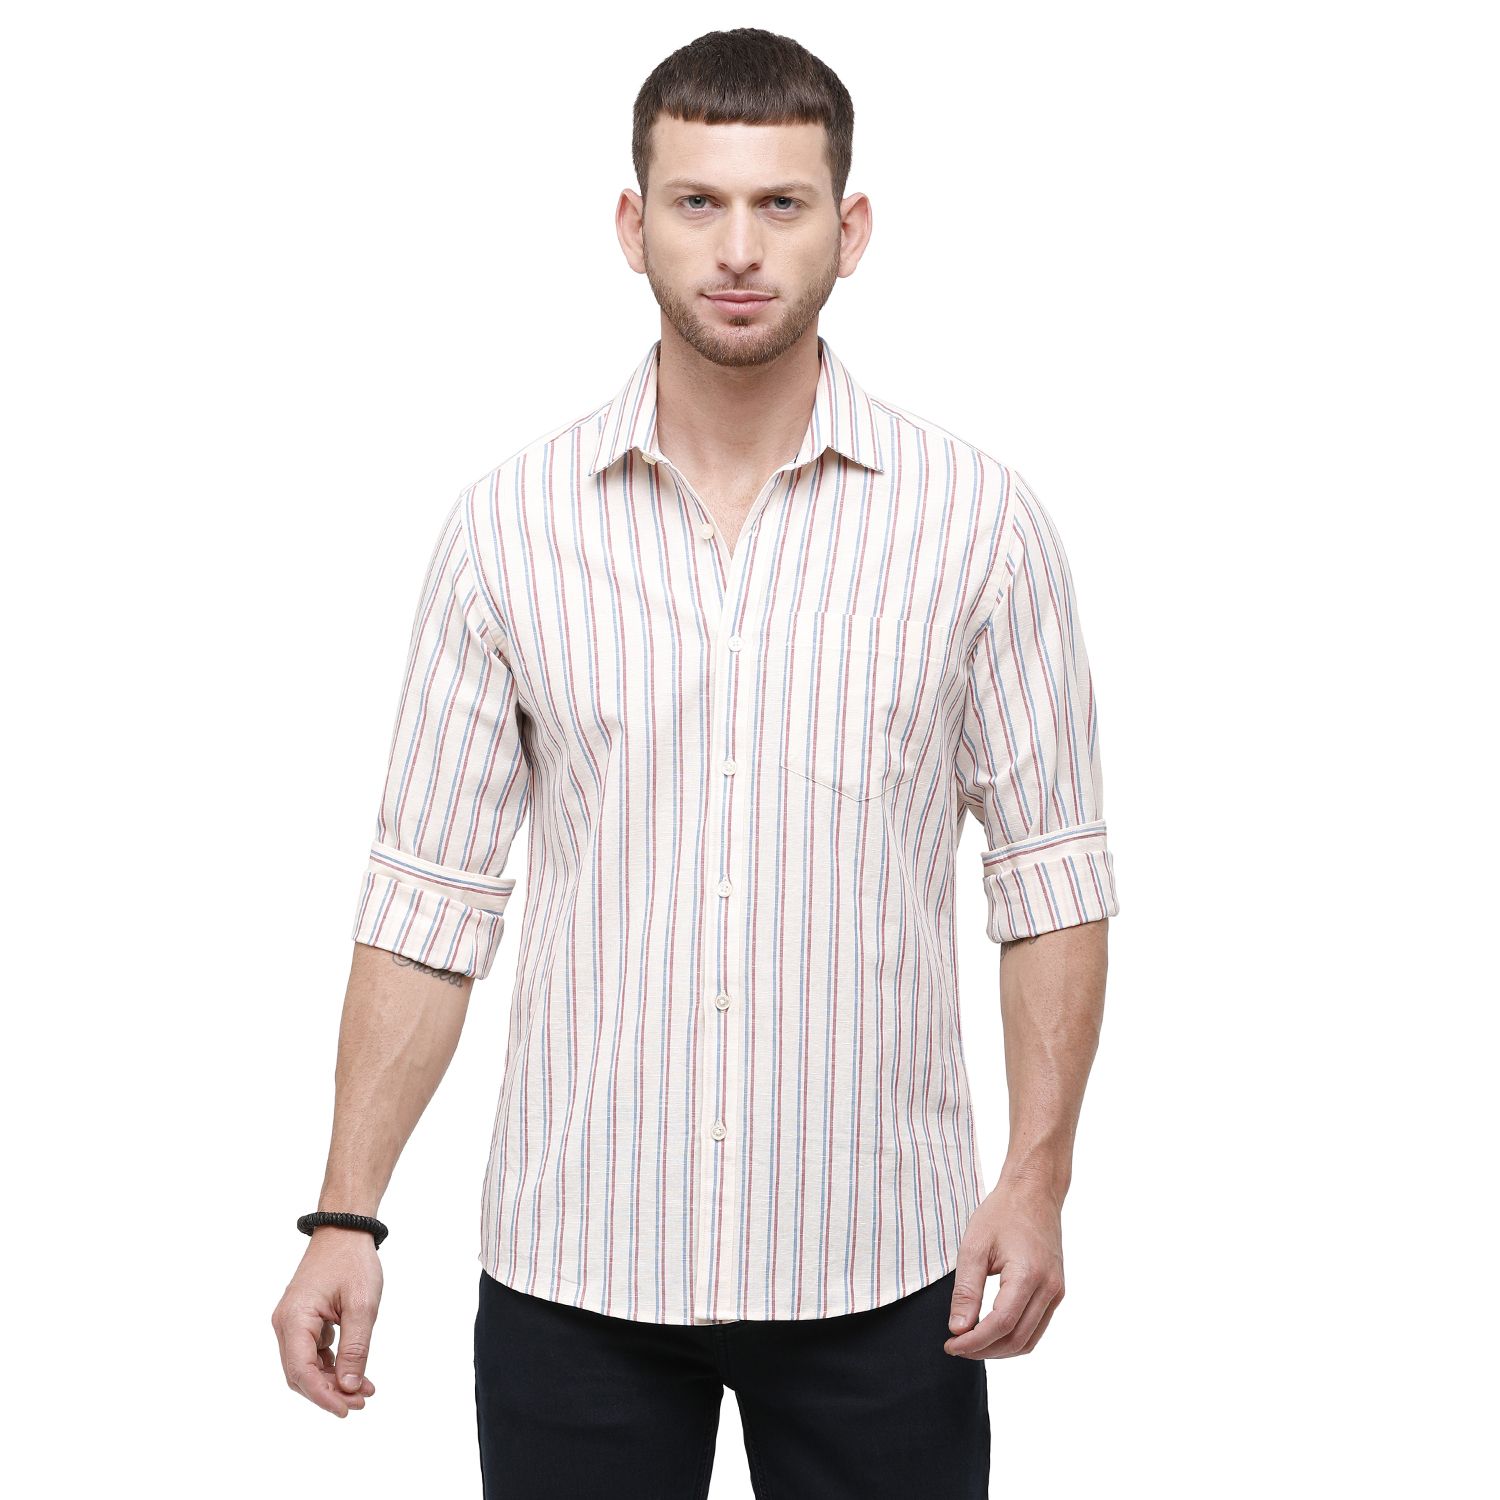 White Striped Shirt - Cavallo Studio by Linen Club